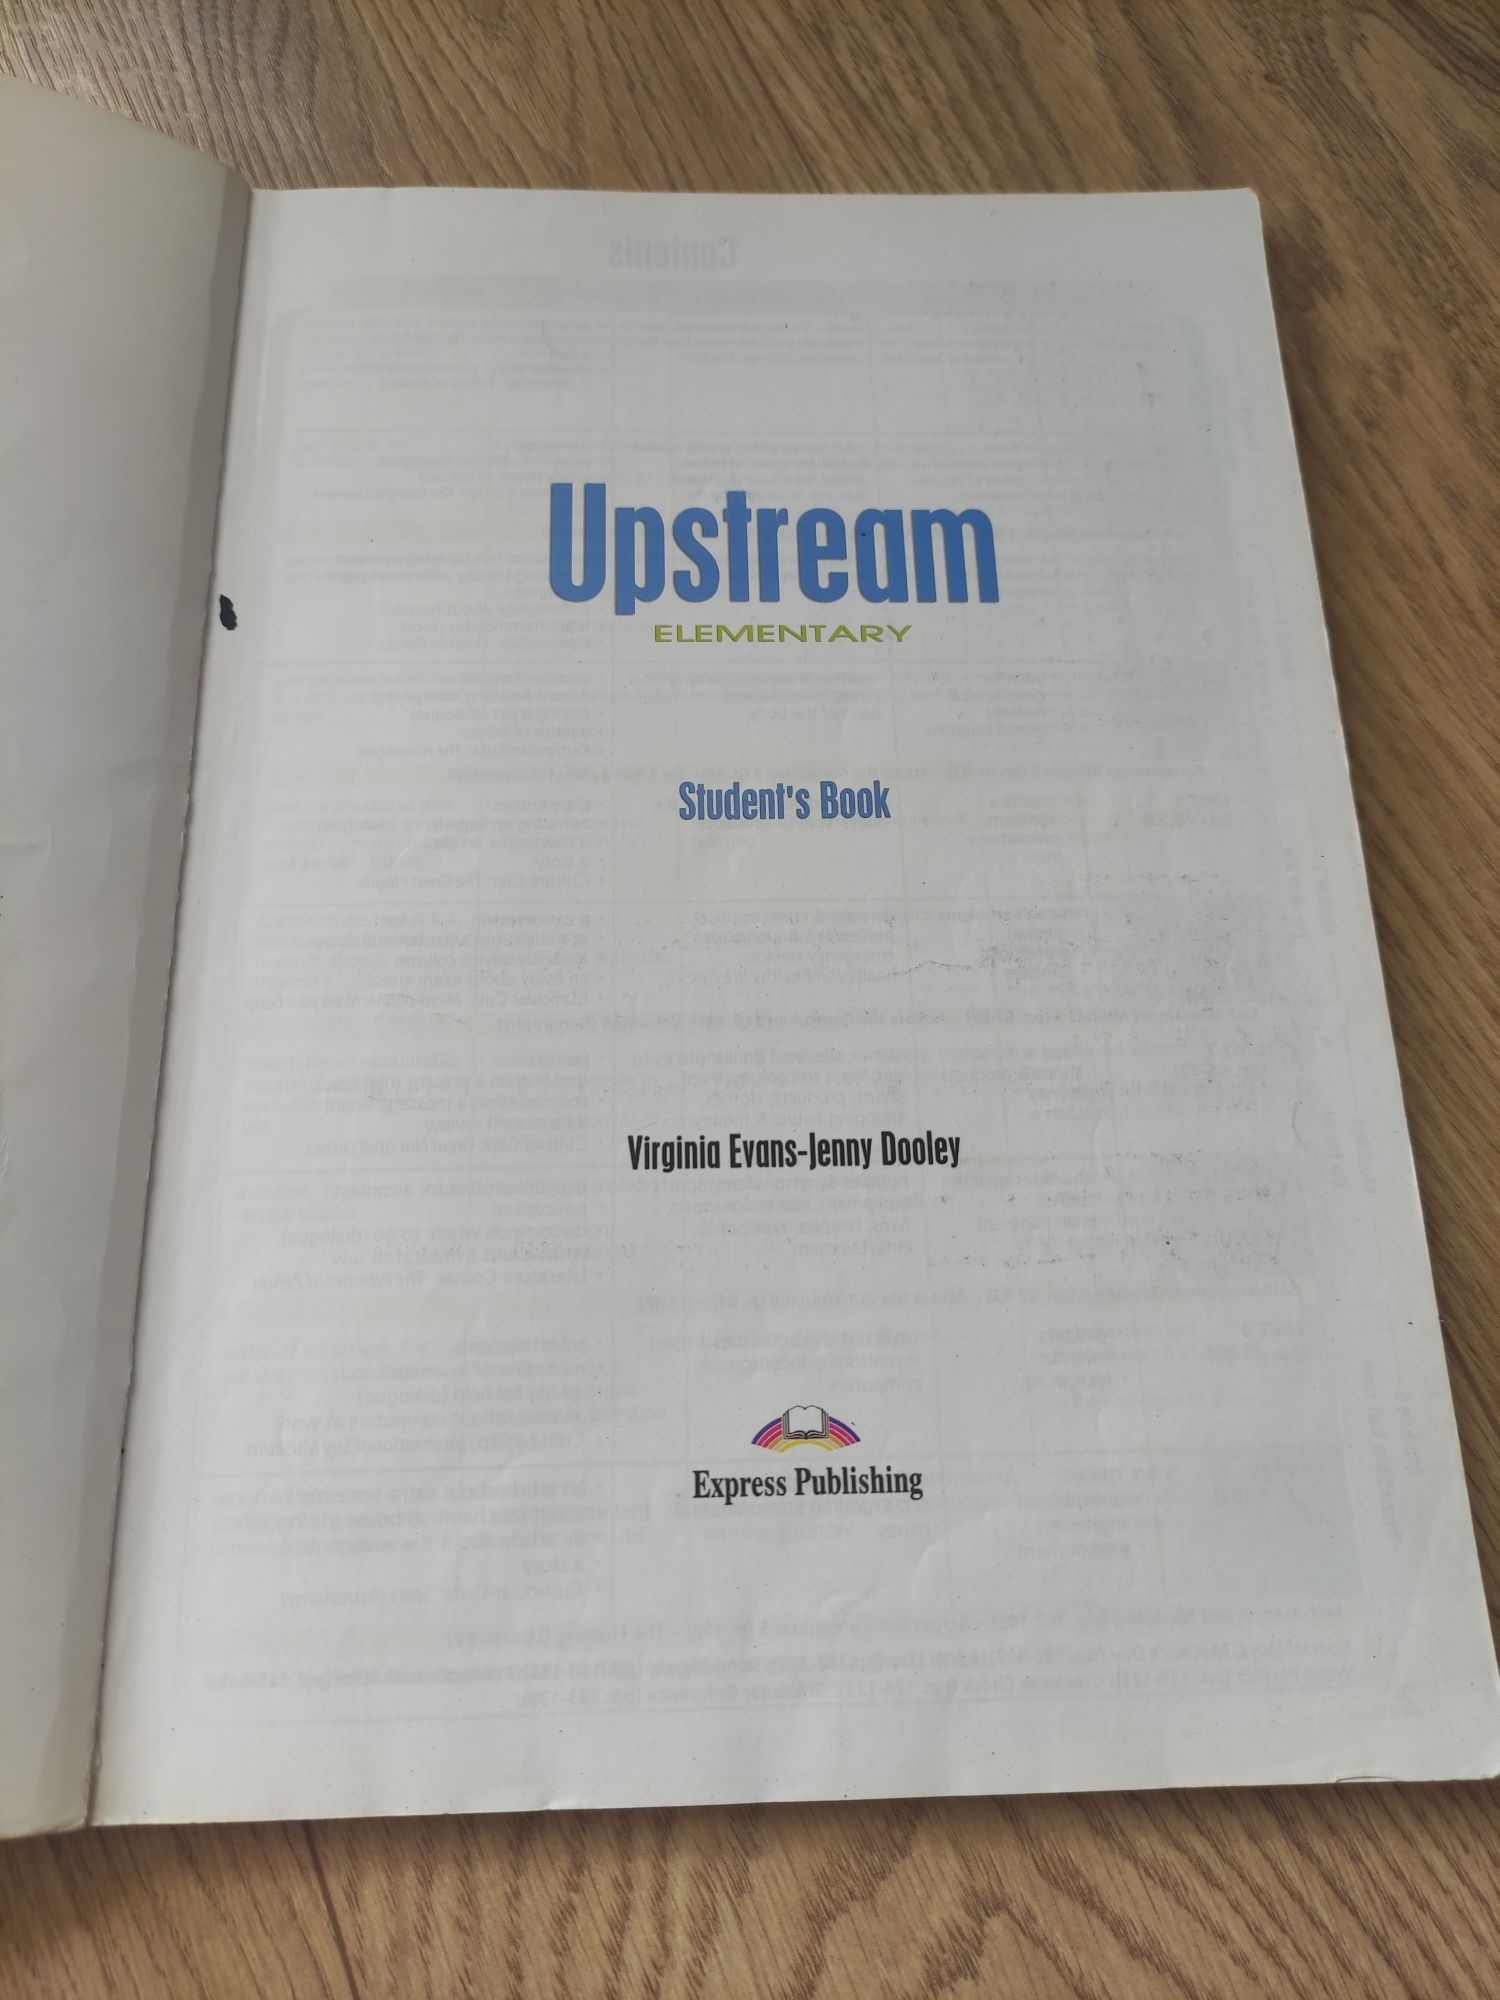 Upstream elementarny student's book